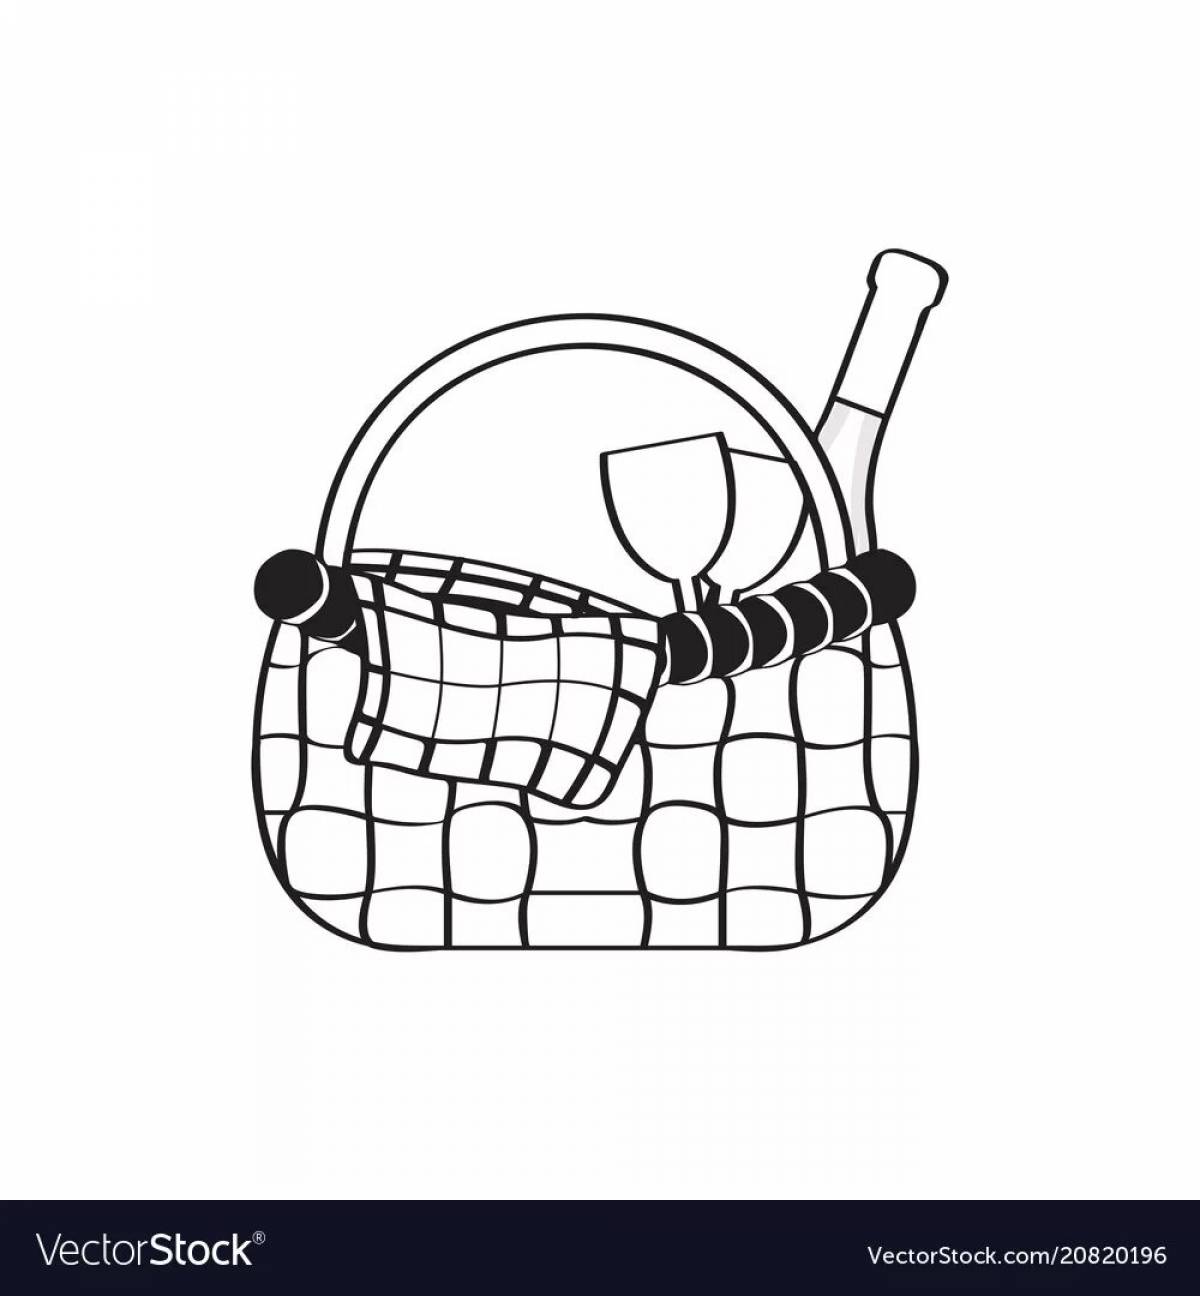 Picnic basket #4